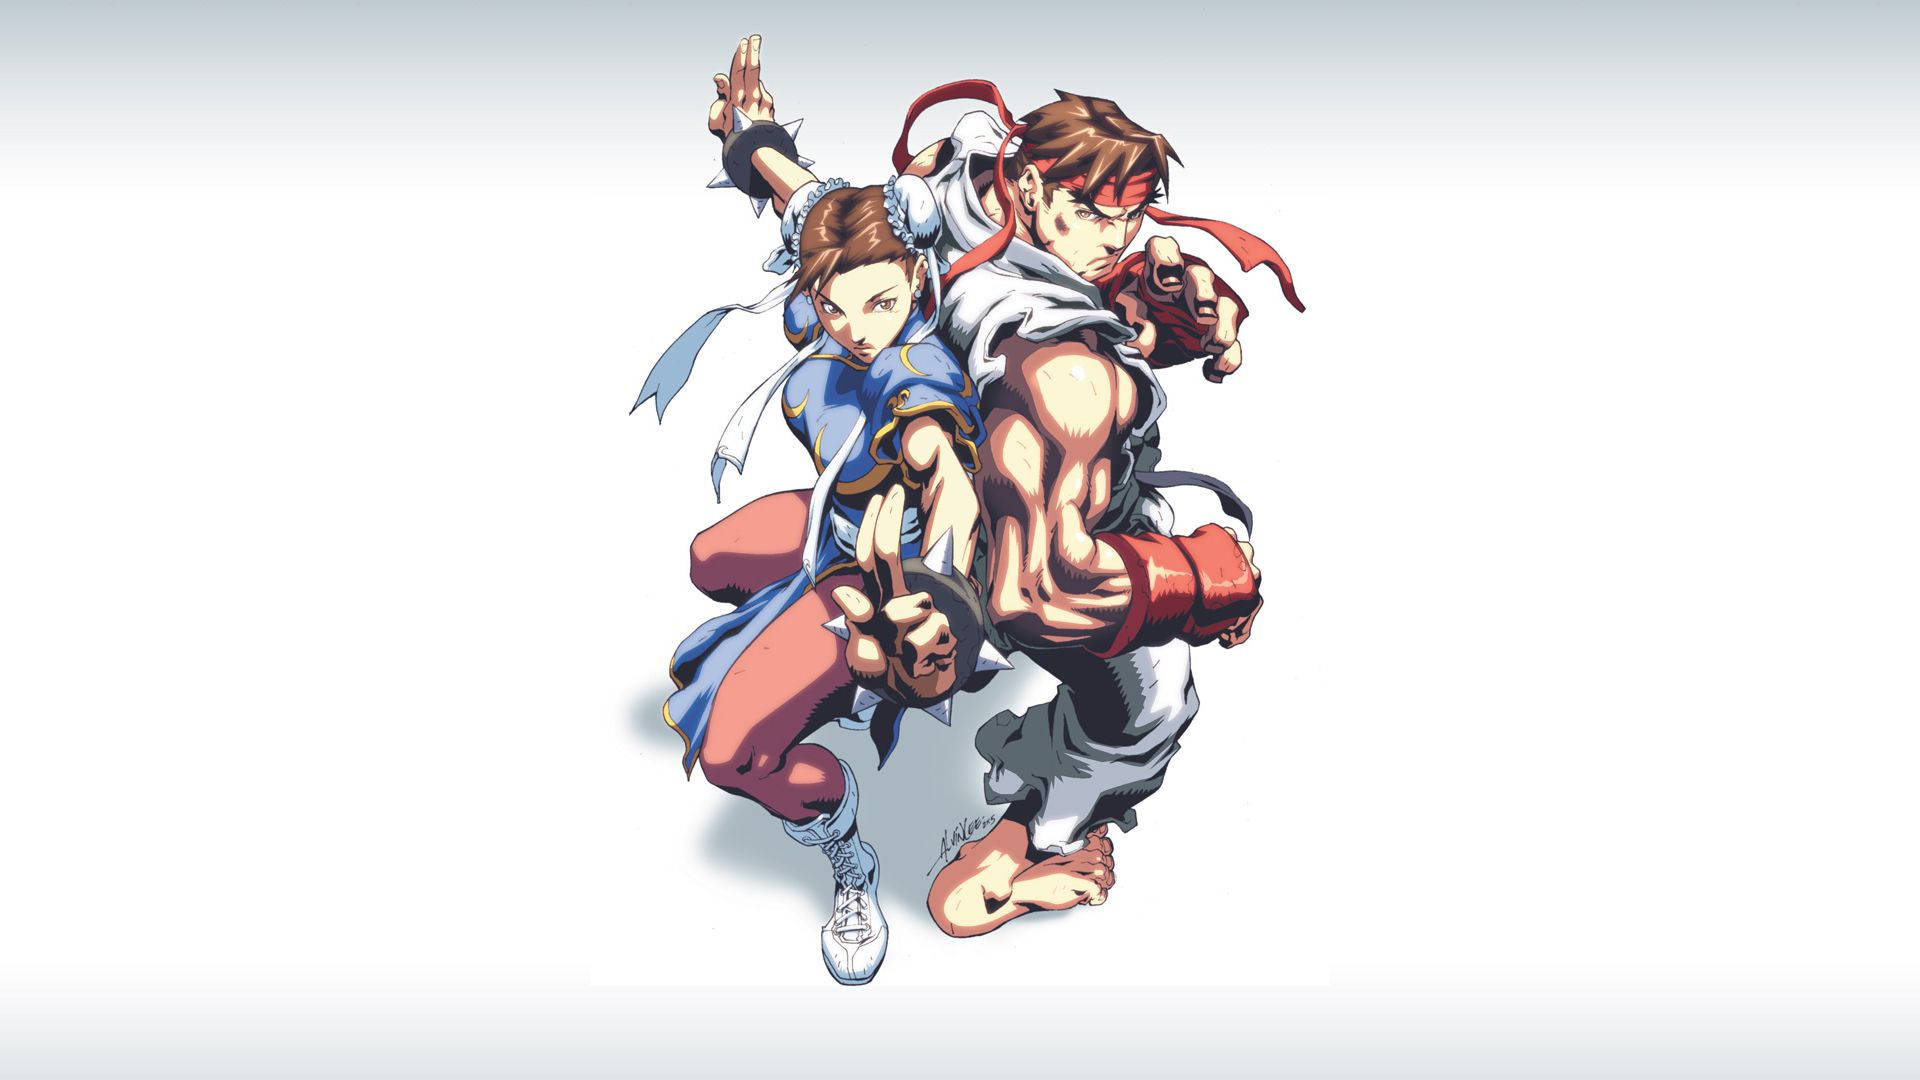 Chun-li And Ryu Ultra Street Fighter